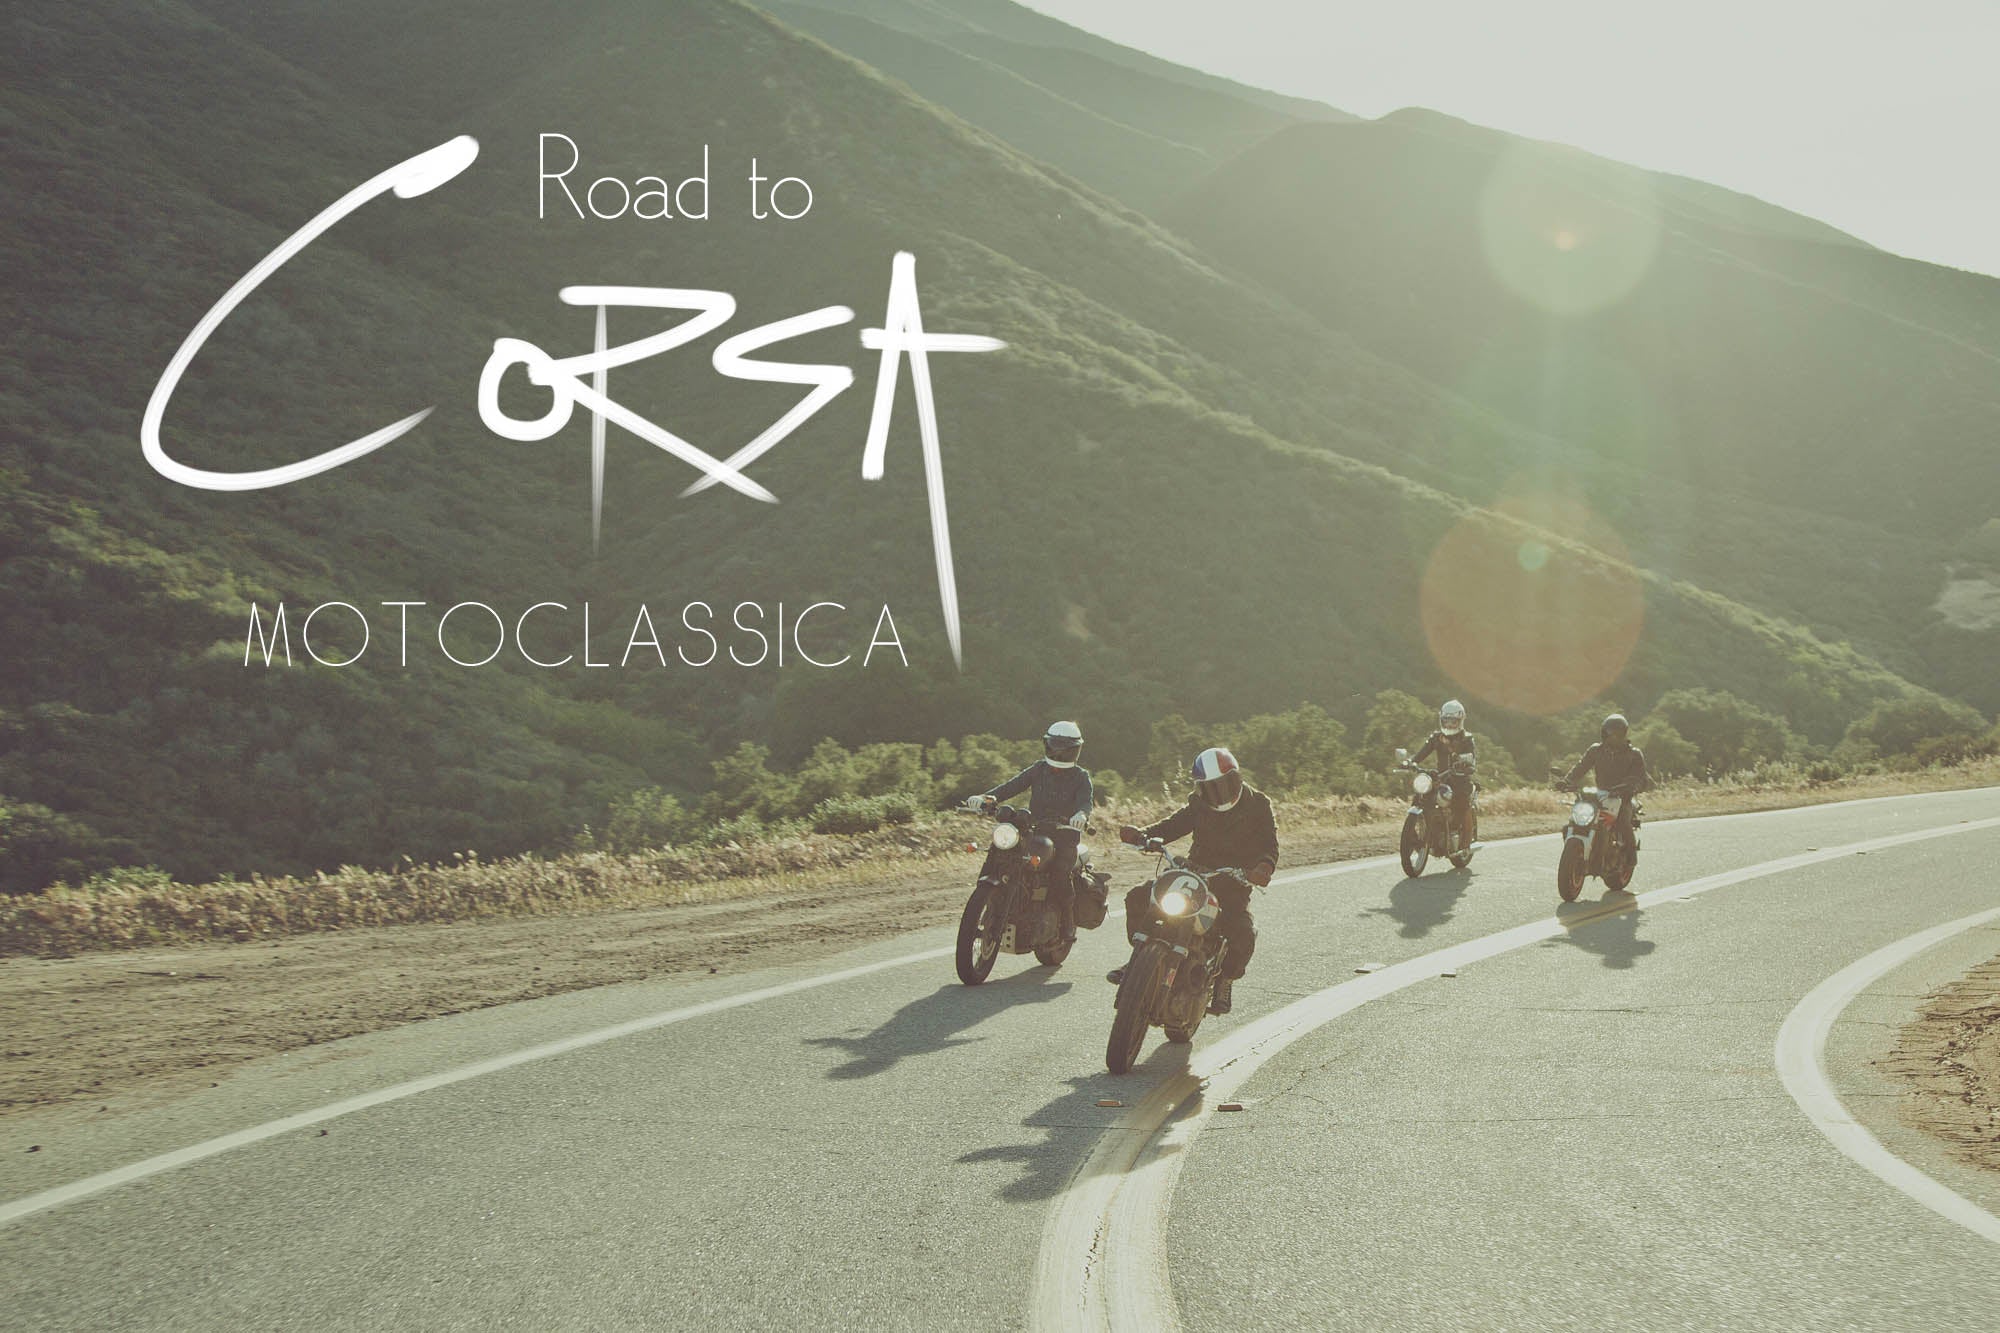 uglyBROS-USA + The Mighty Motor presents ‘Road To Corsa Motoclassica’